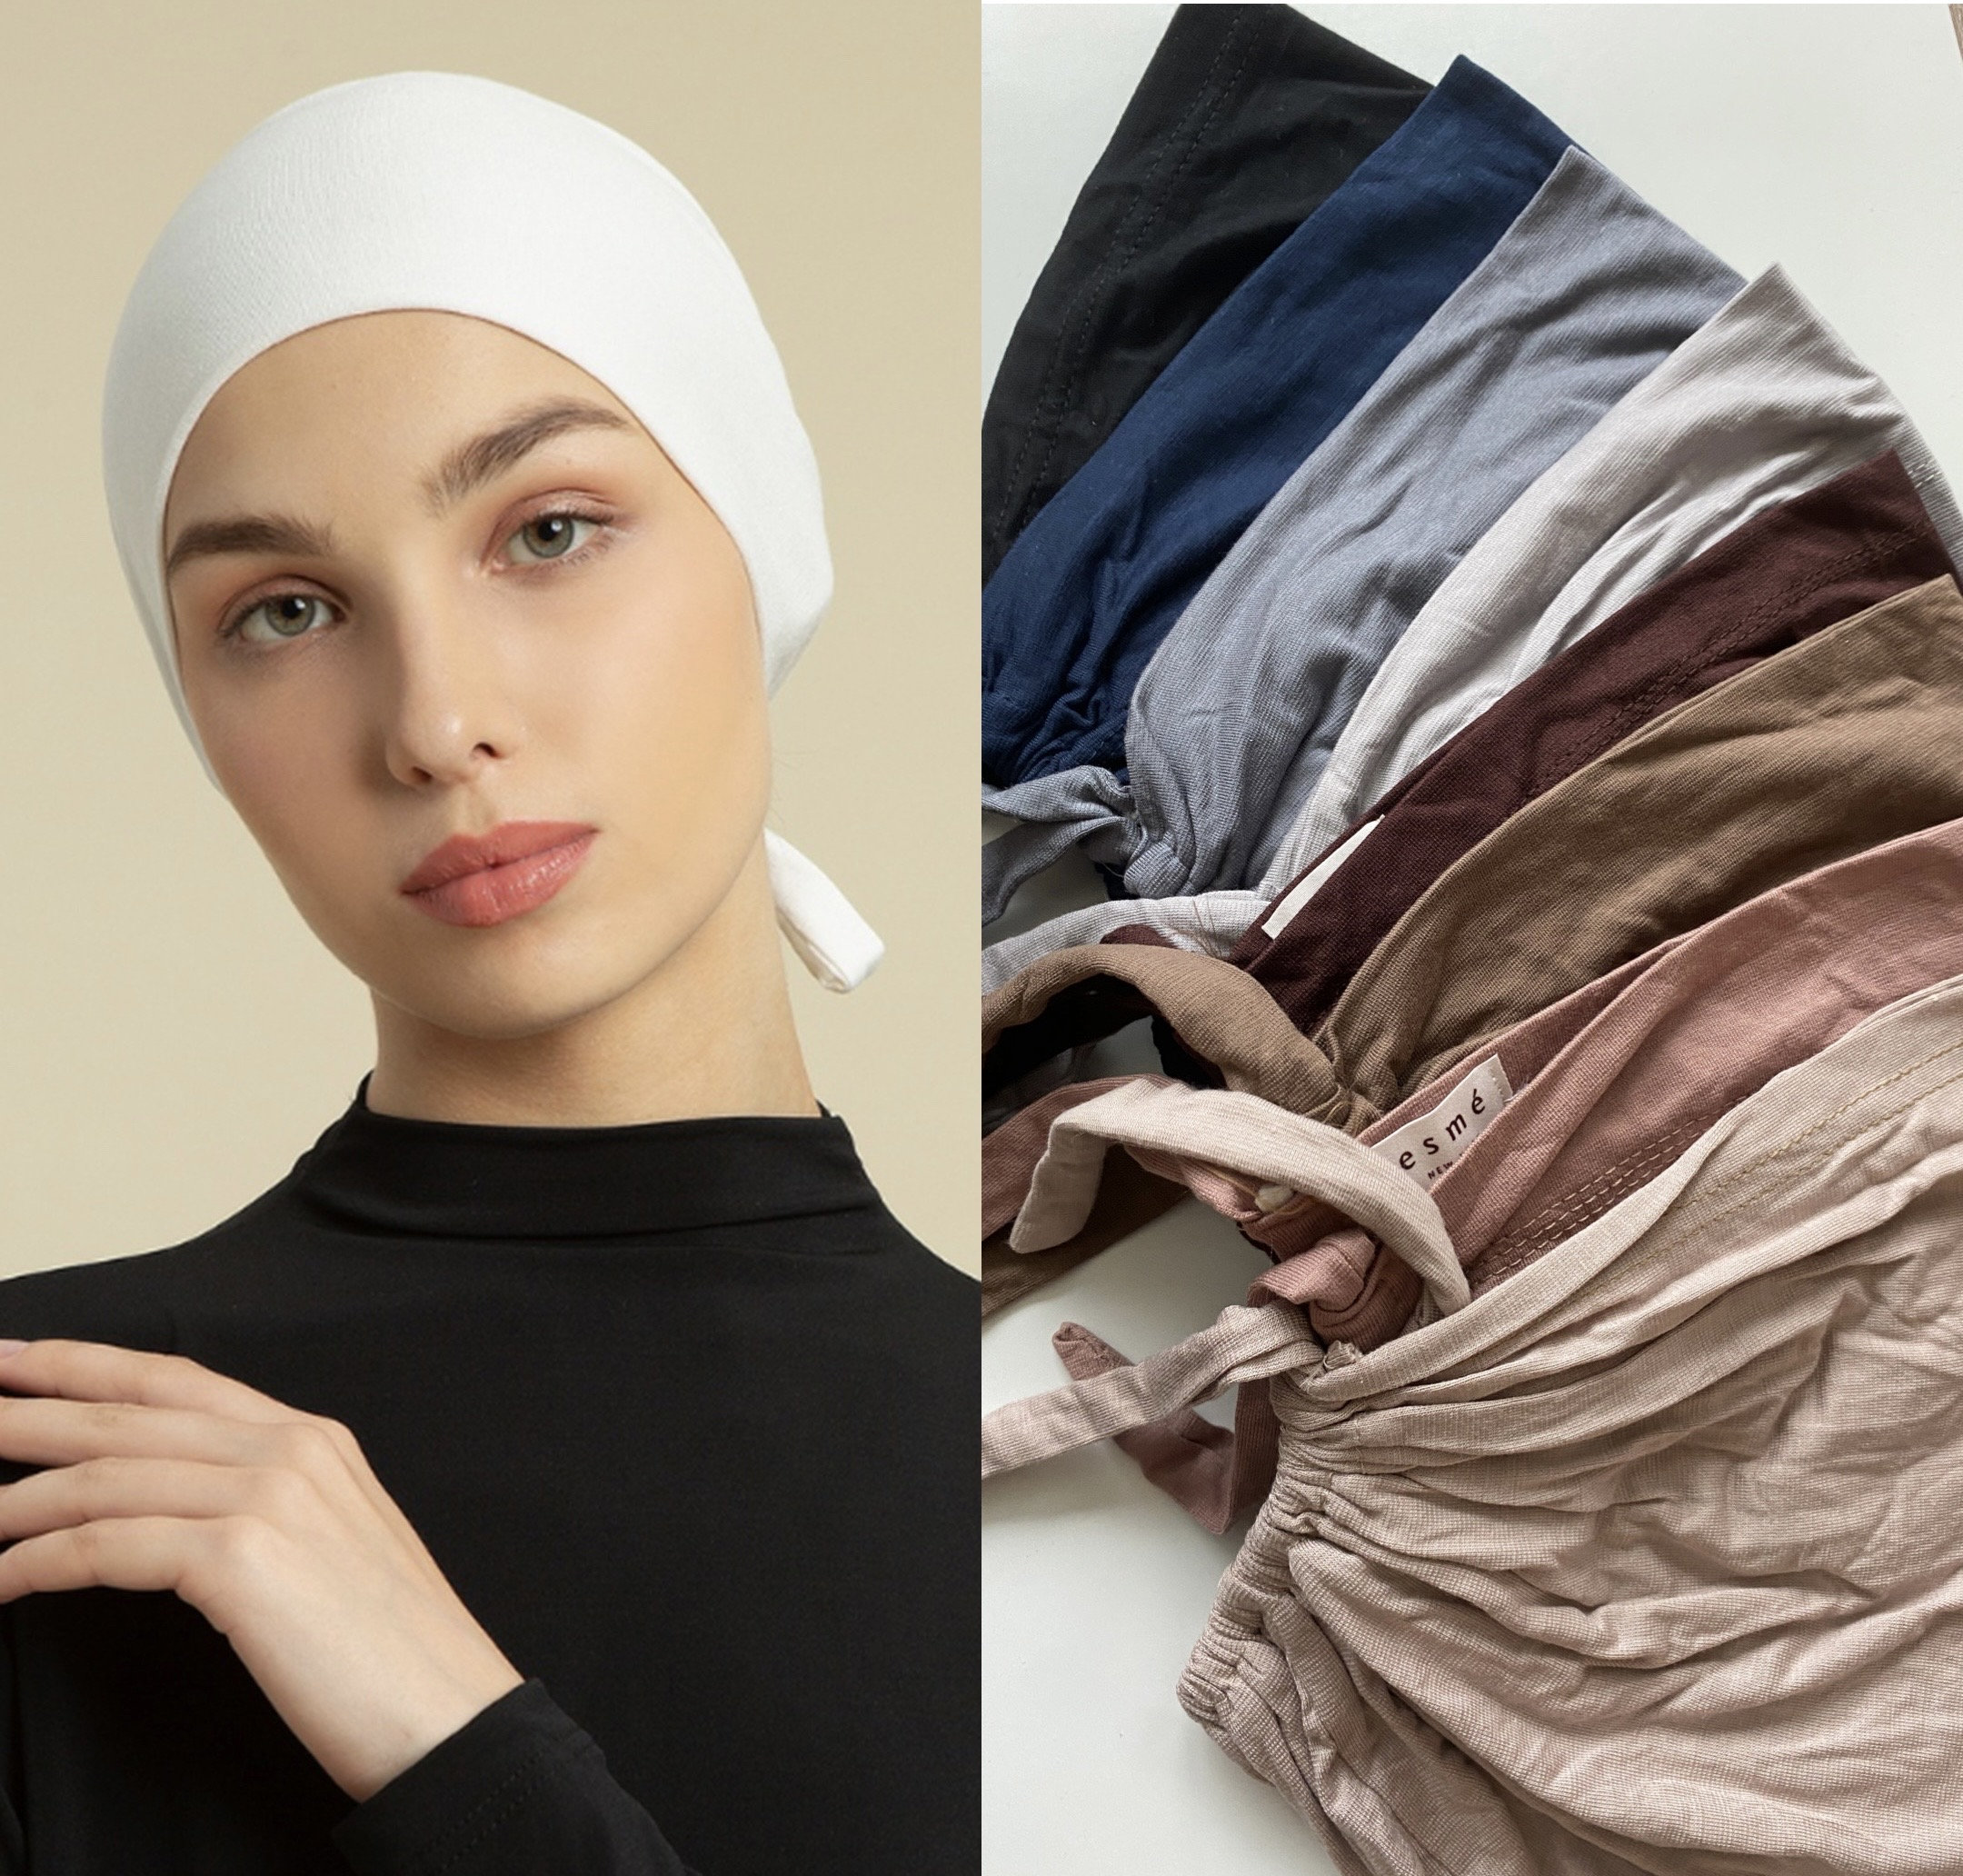 Tie Back Non-slip Underscarf in Neutral Colors Ramadan Eid Gift Muslim  Undercap Underhijab 